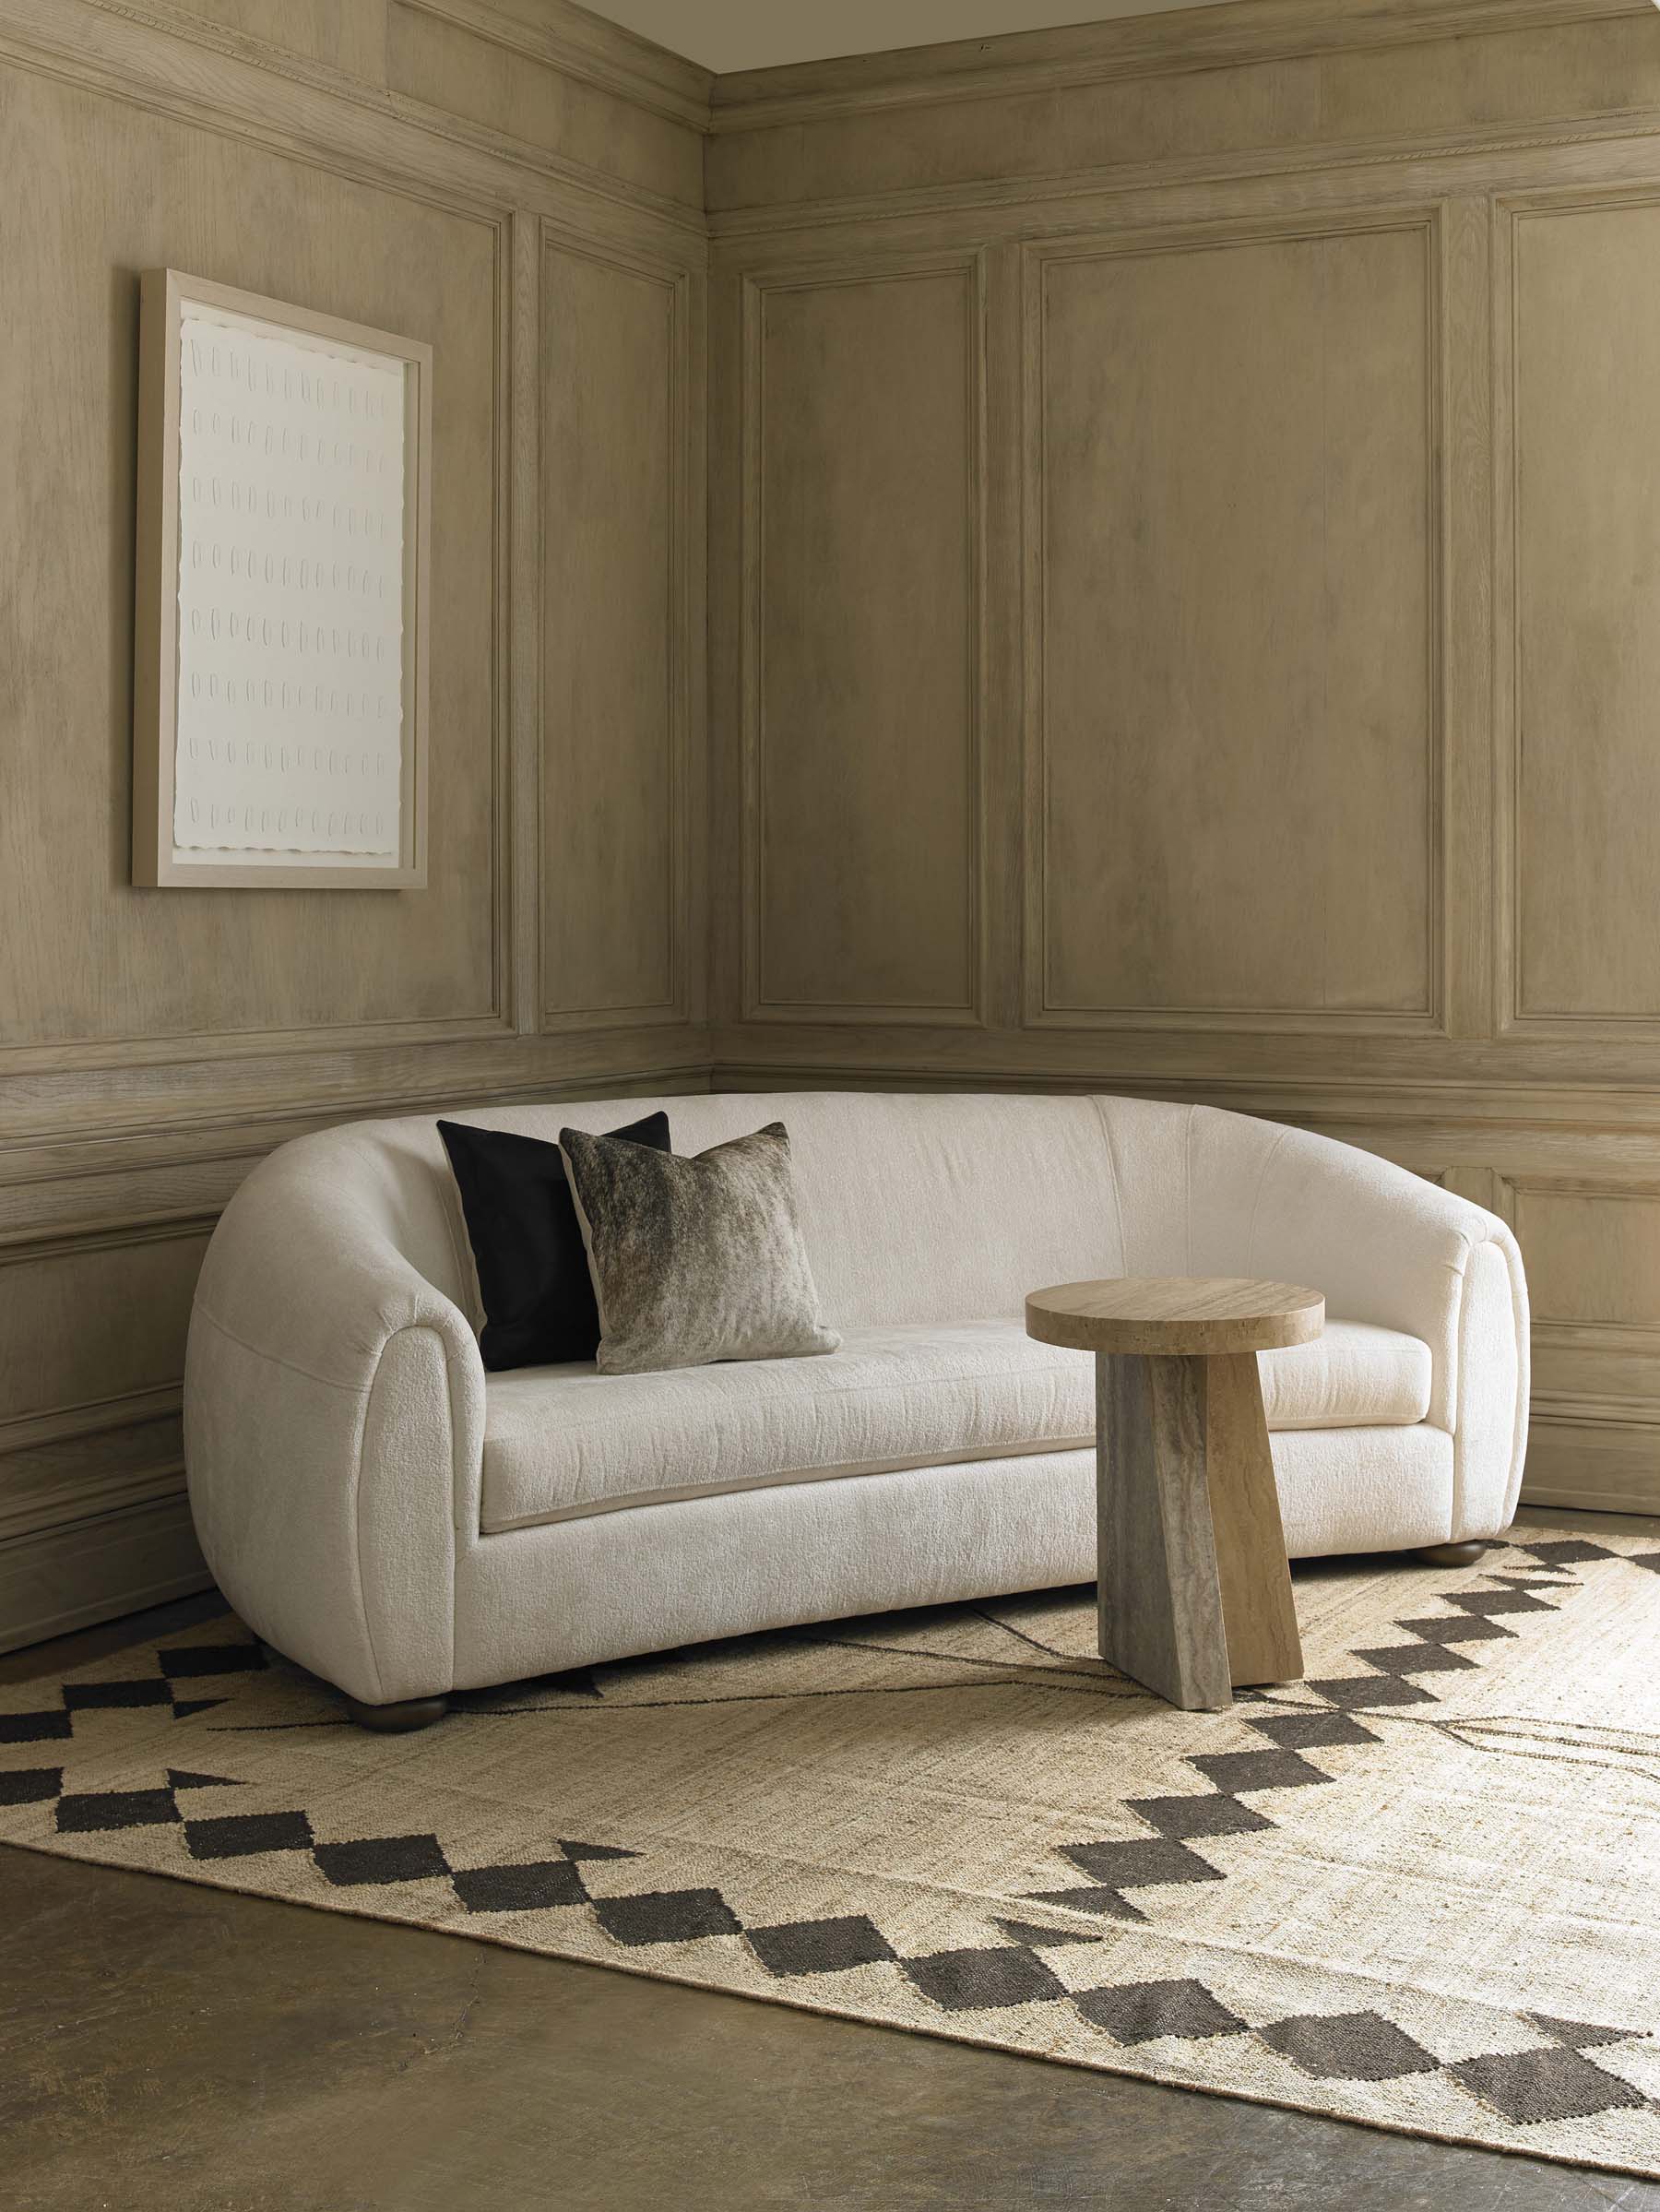 American upholstery, designer furniture